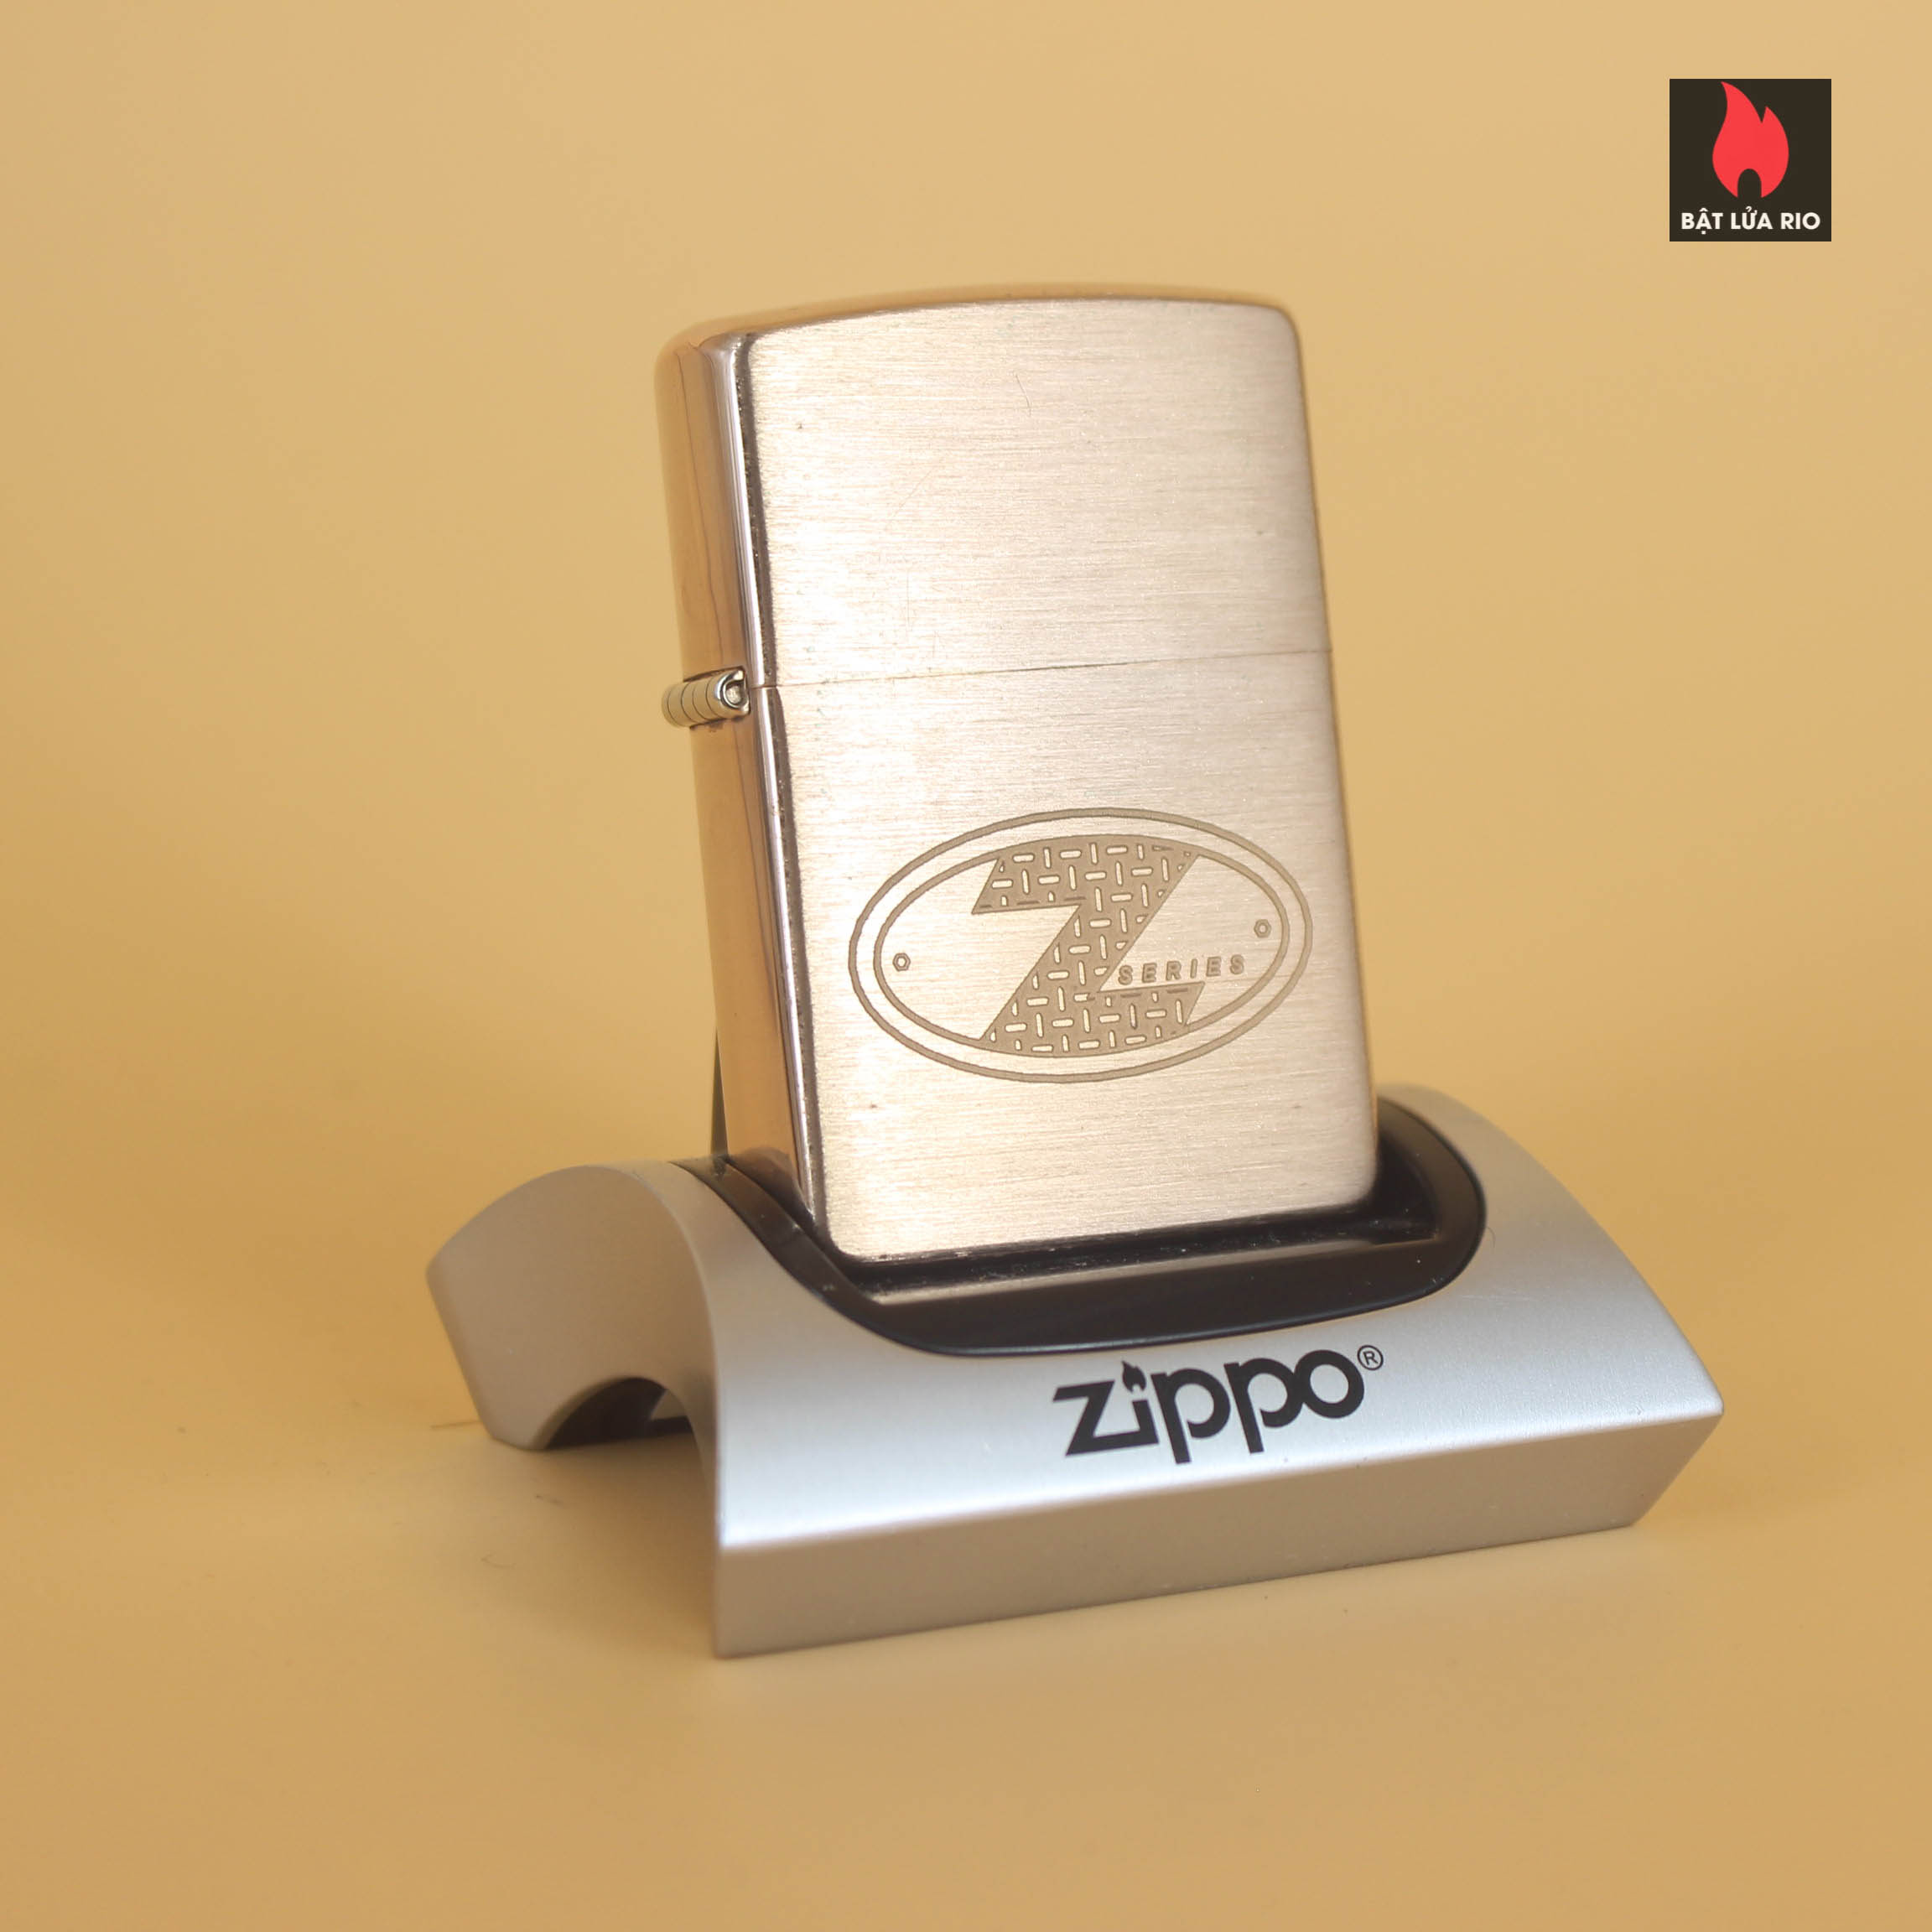 Zippo 2002 – Zippo Z-Series Copper Project – USA - Limited 582/10188 A 14